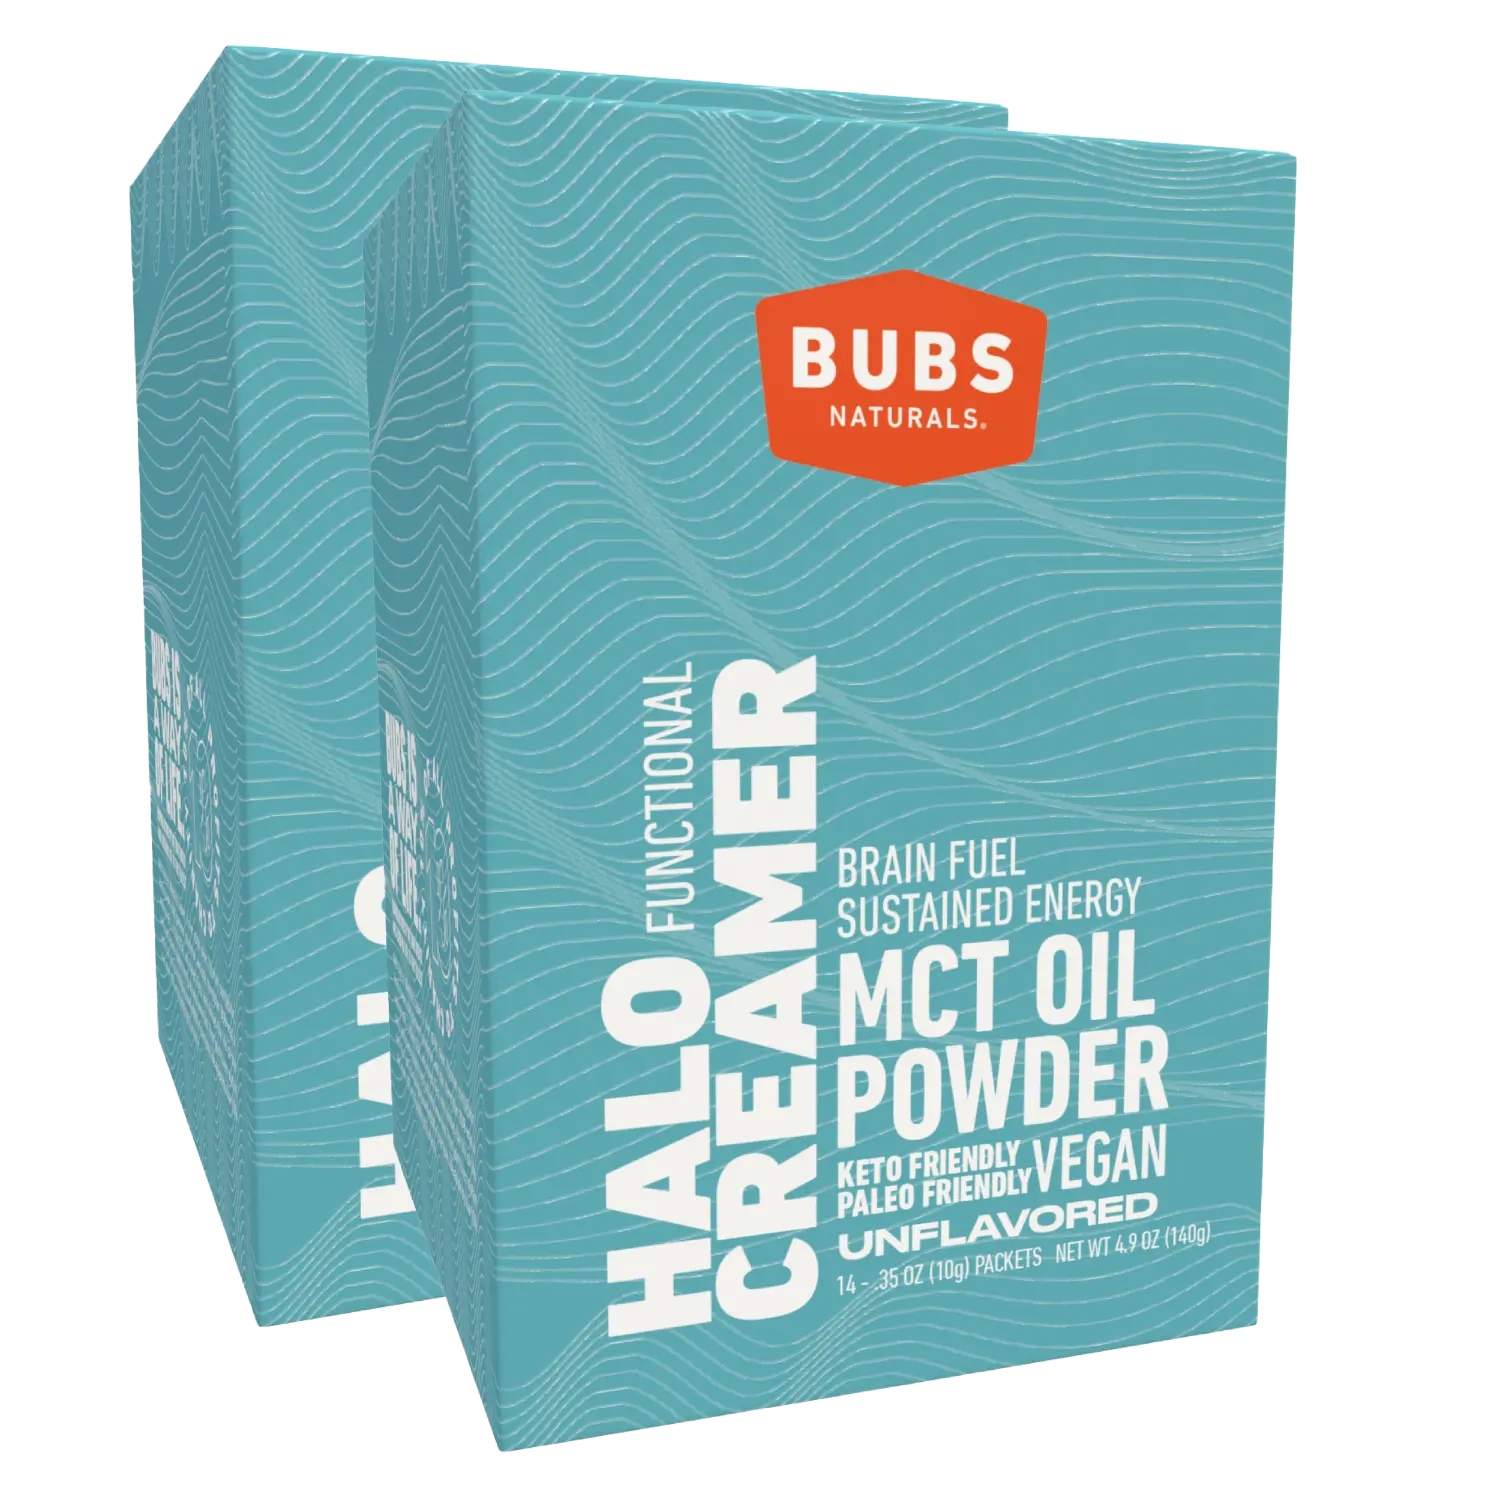 BUBS Naturals MCT Oil Powder, Vegan Halo Functional Creamer, 14ct travel pack, bundle of 2